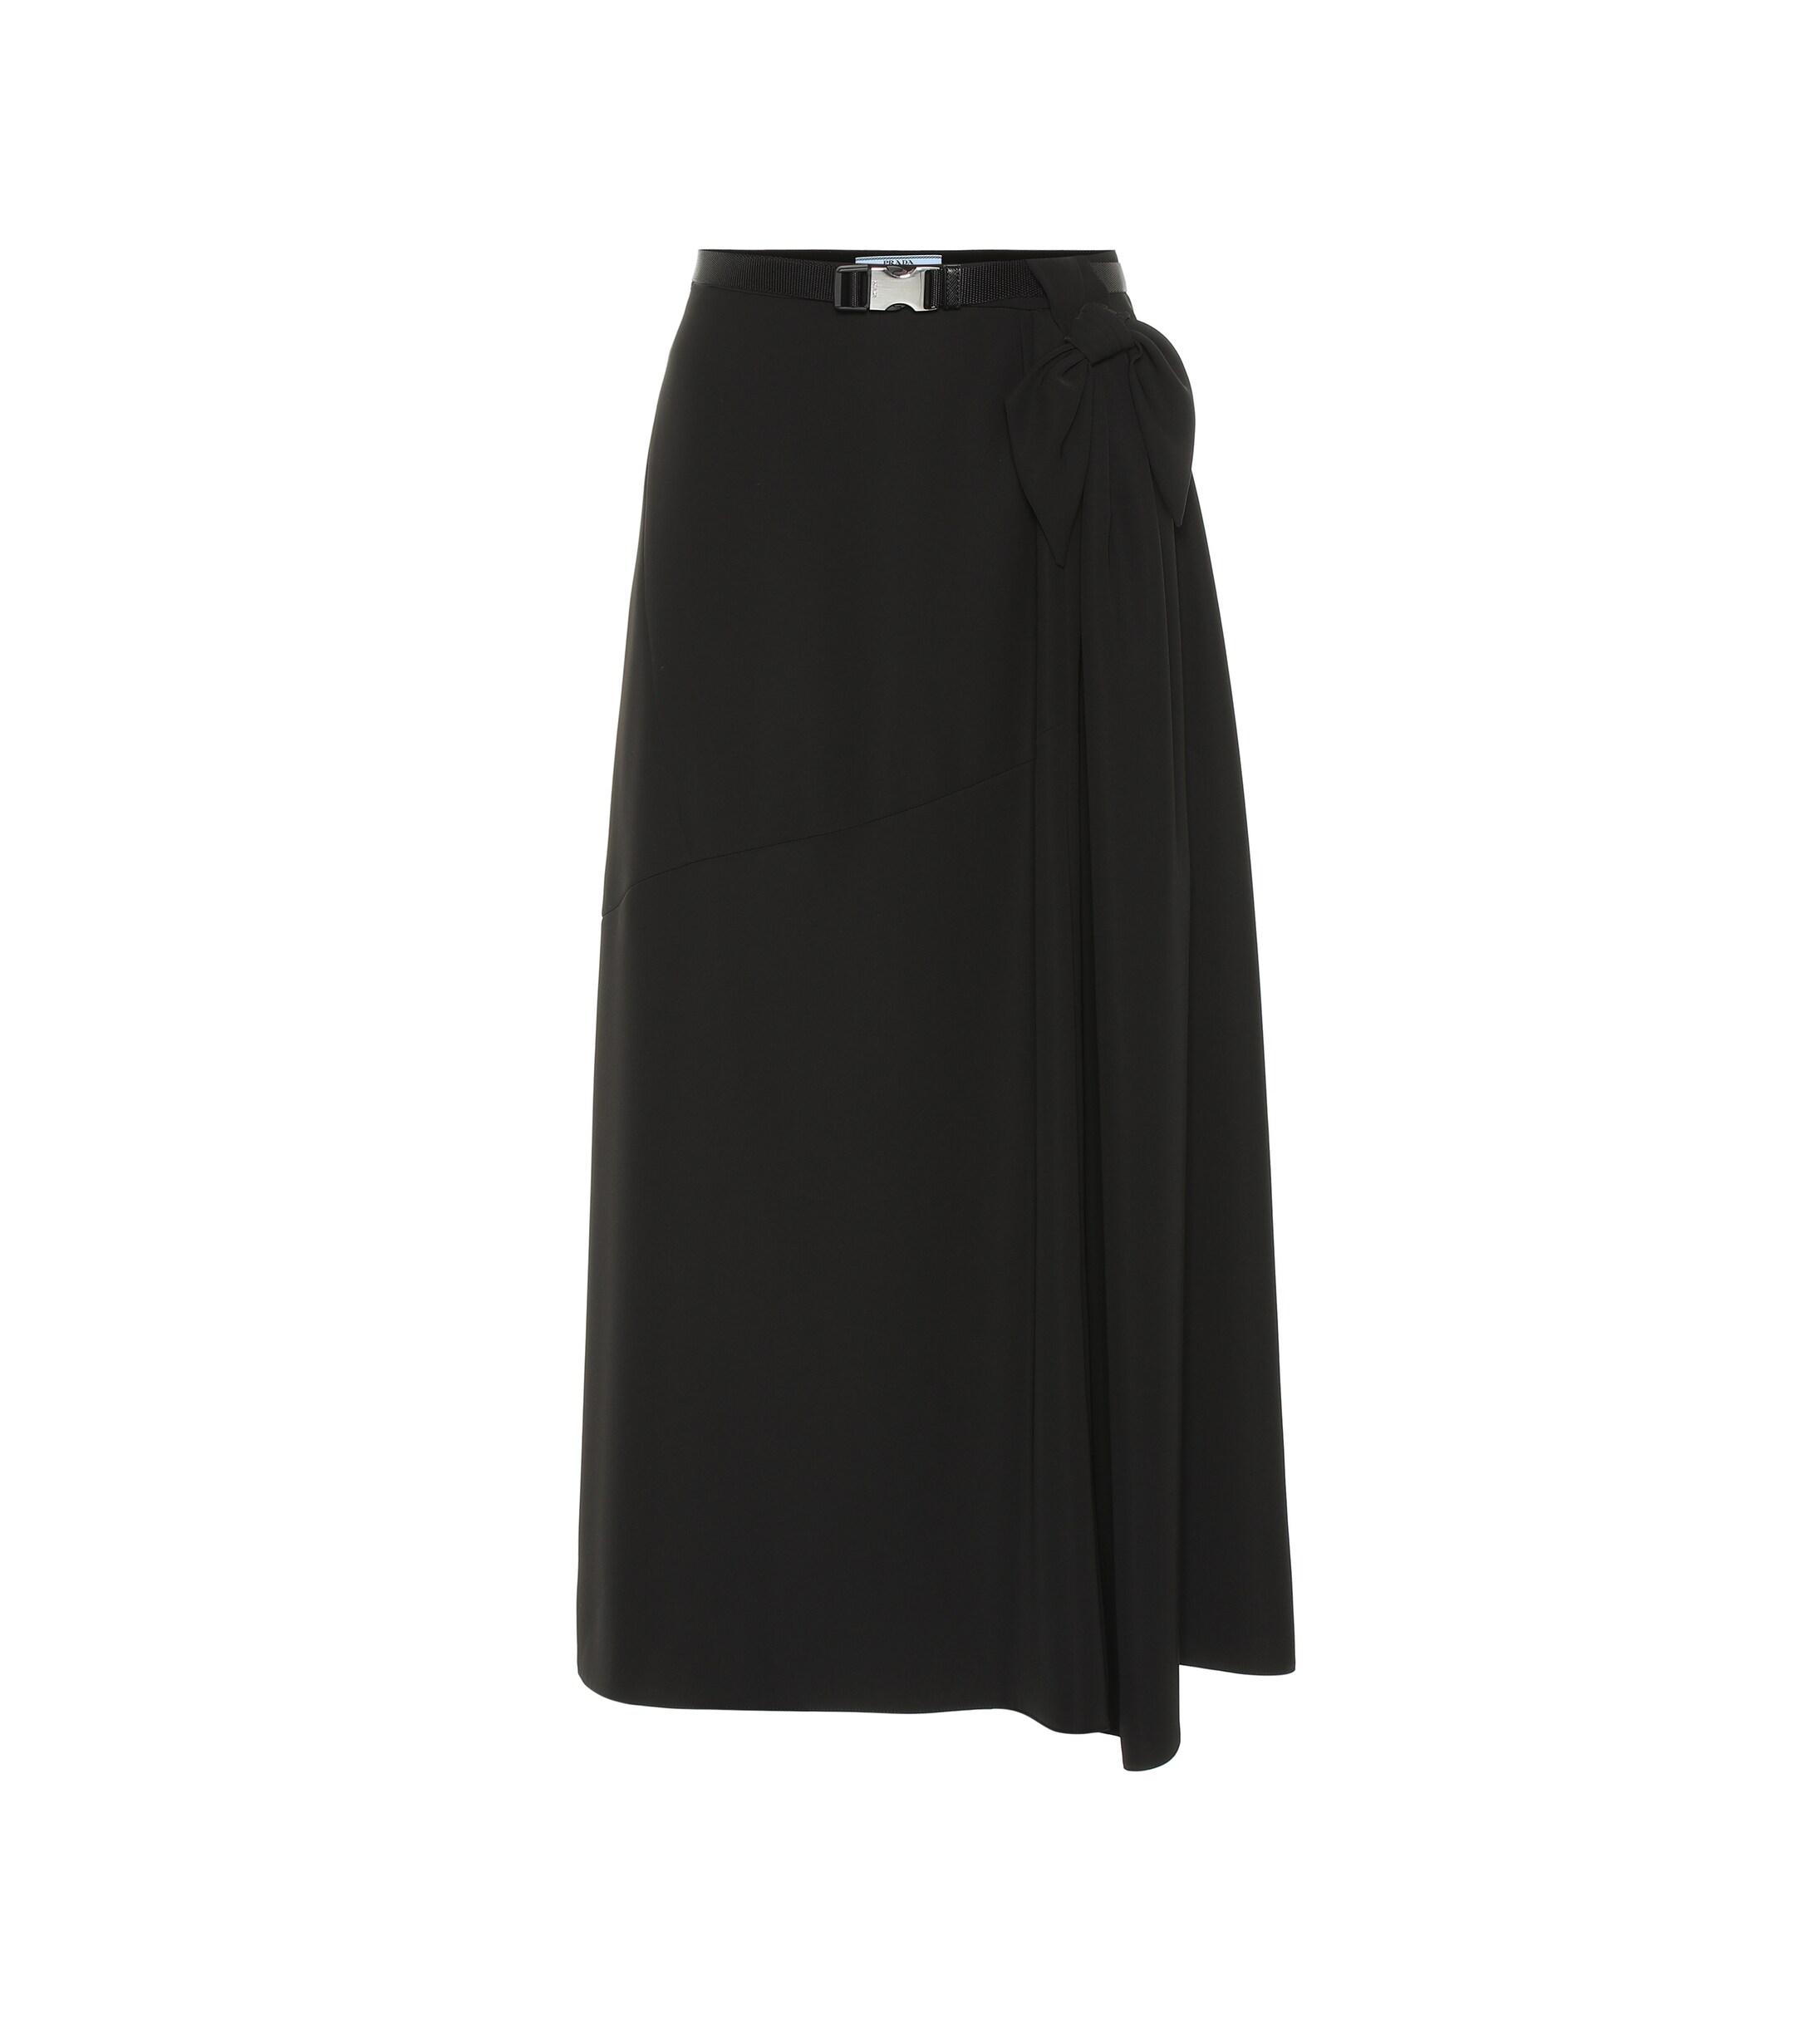 Prada Crêpe Midi Skirt in Black - Lyst